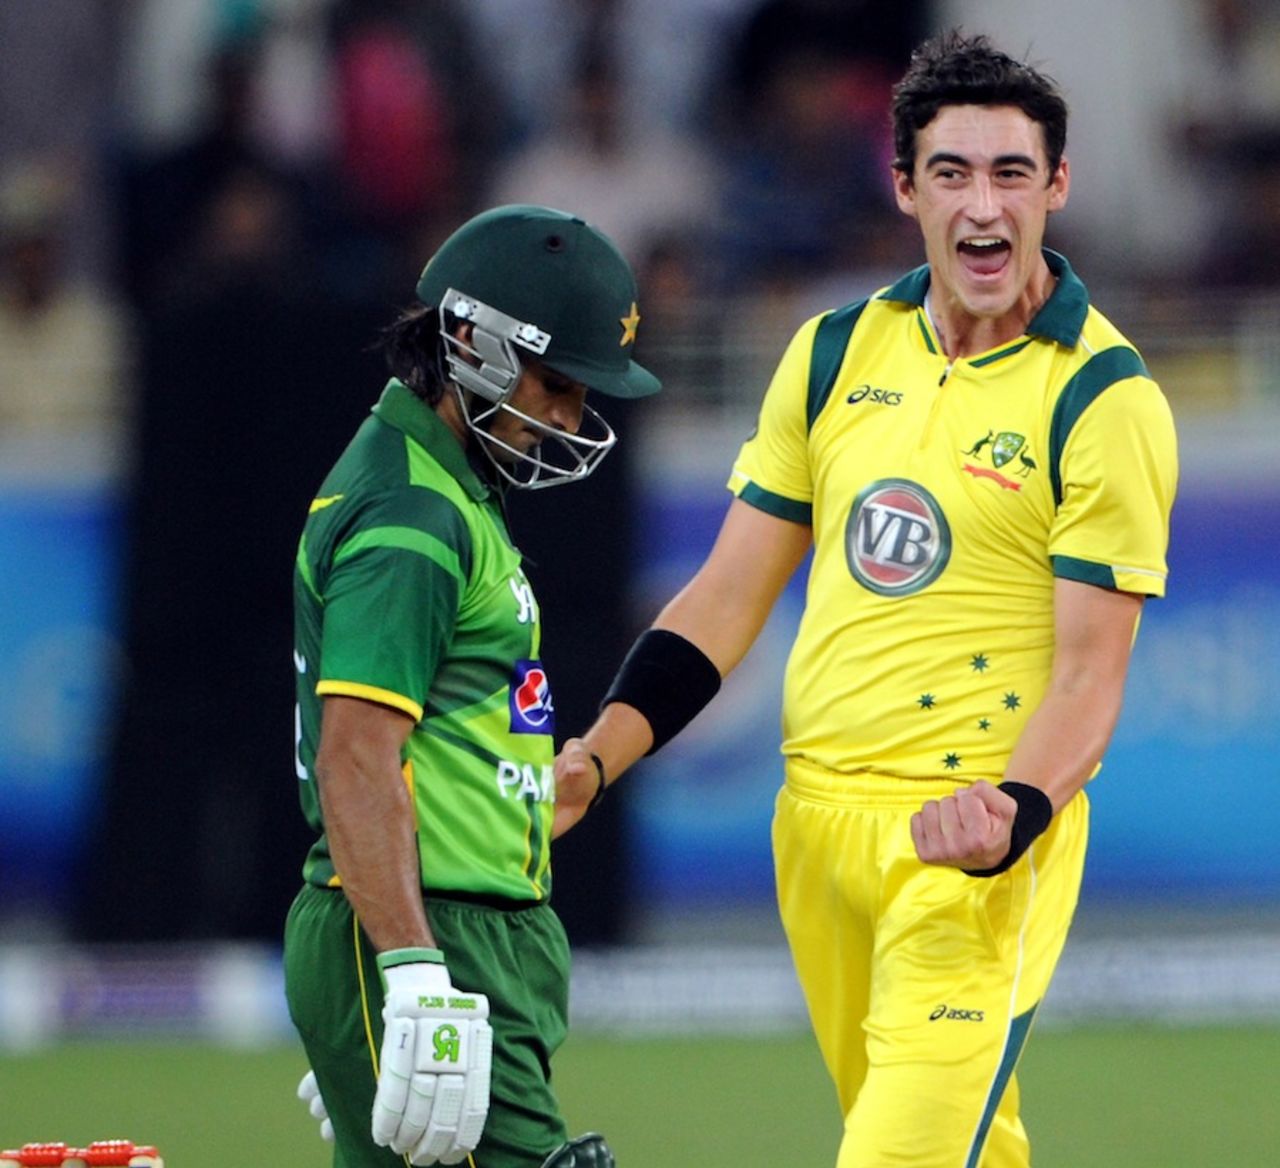 Mitchell Starc trapped Imran Nazir in front, Pakistan v Australia, 3rd T20I, Dubai, September 10, 2012